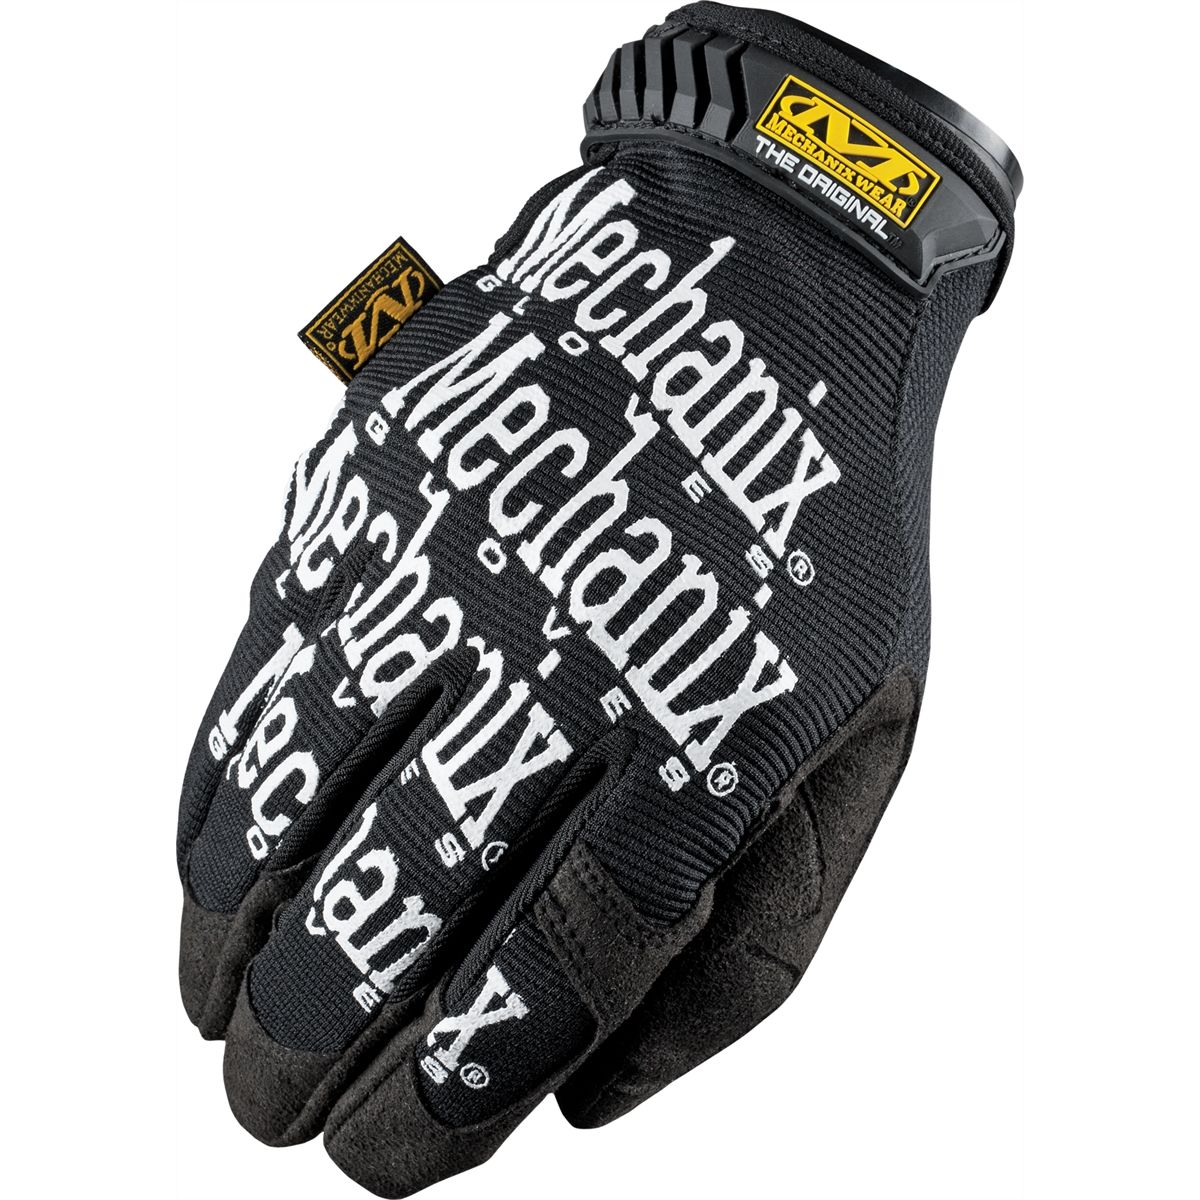 Original Gloves Black - X-Small